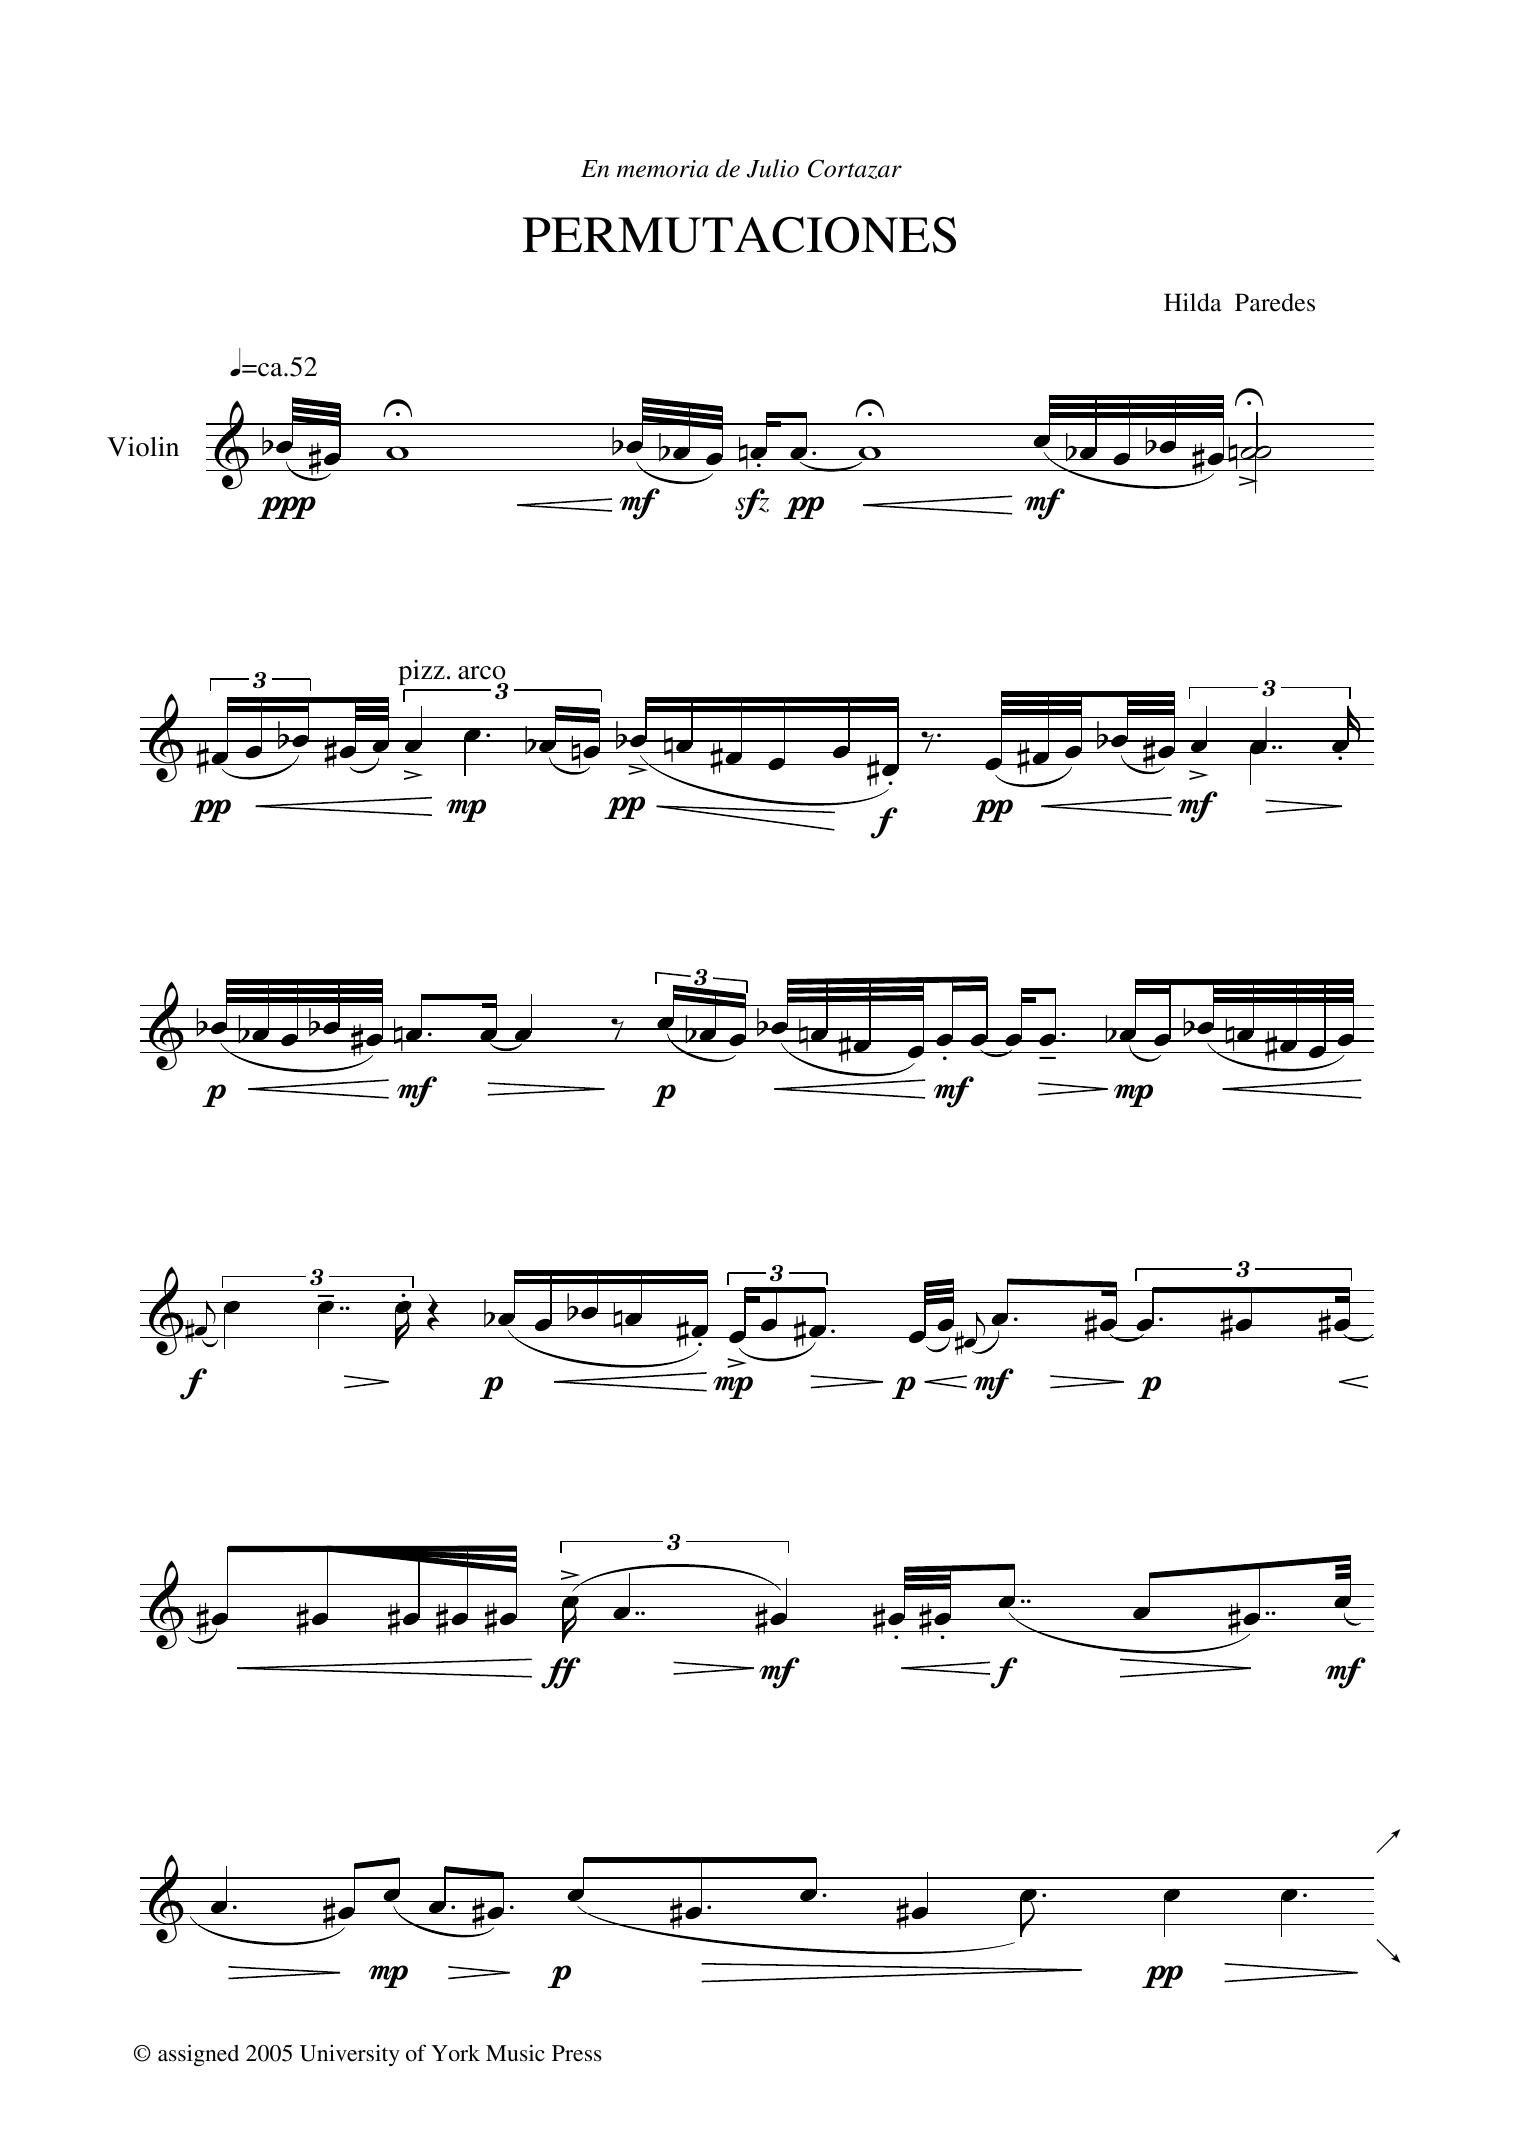 Hilda Paredes Permutaciones Sheet Music Notes & Chords for Violin - Download or Print PDF